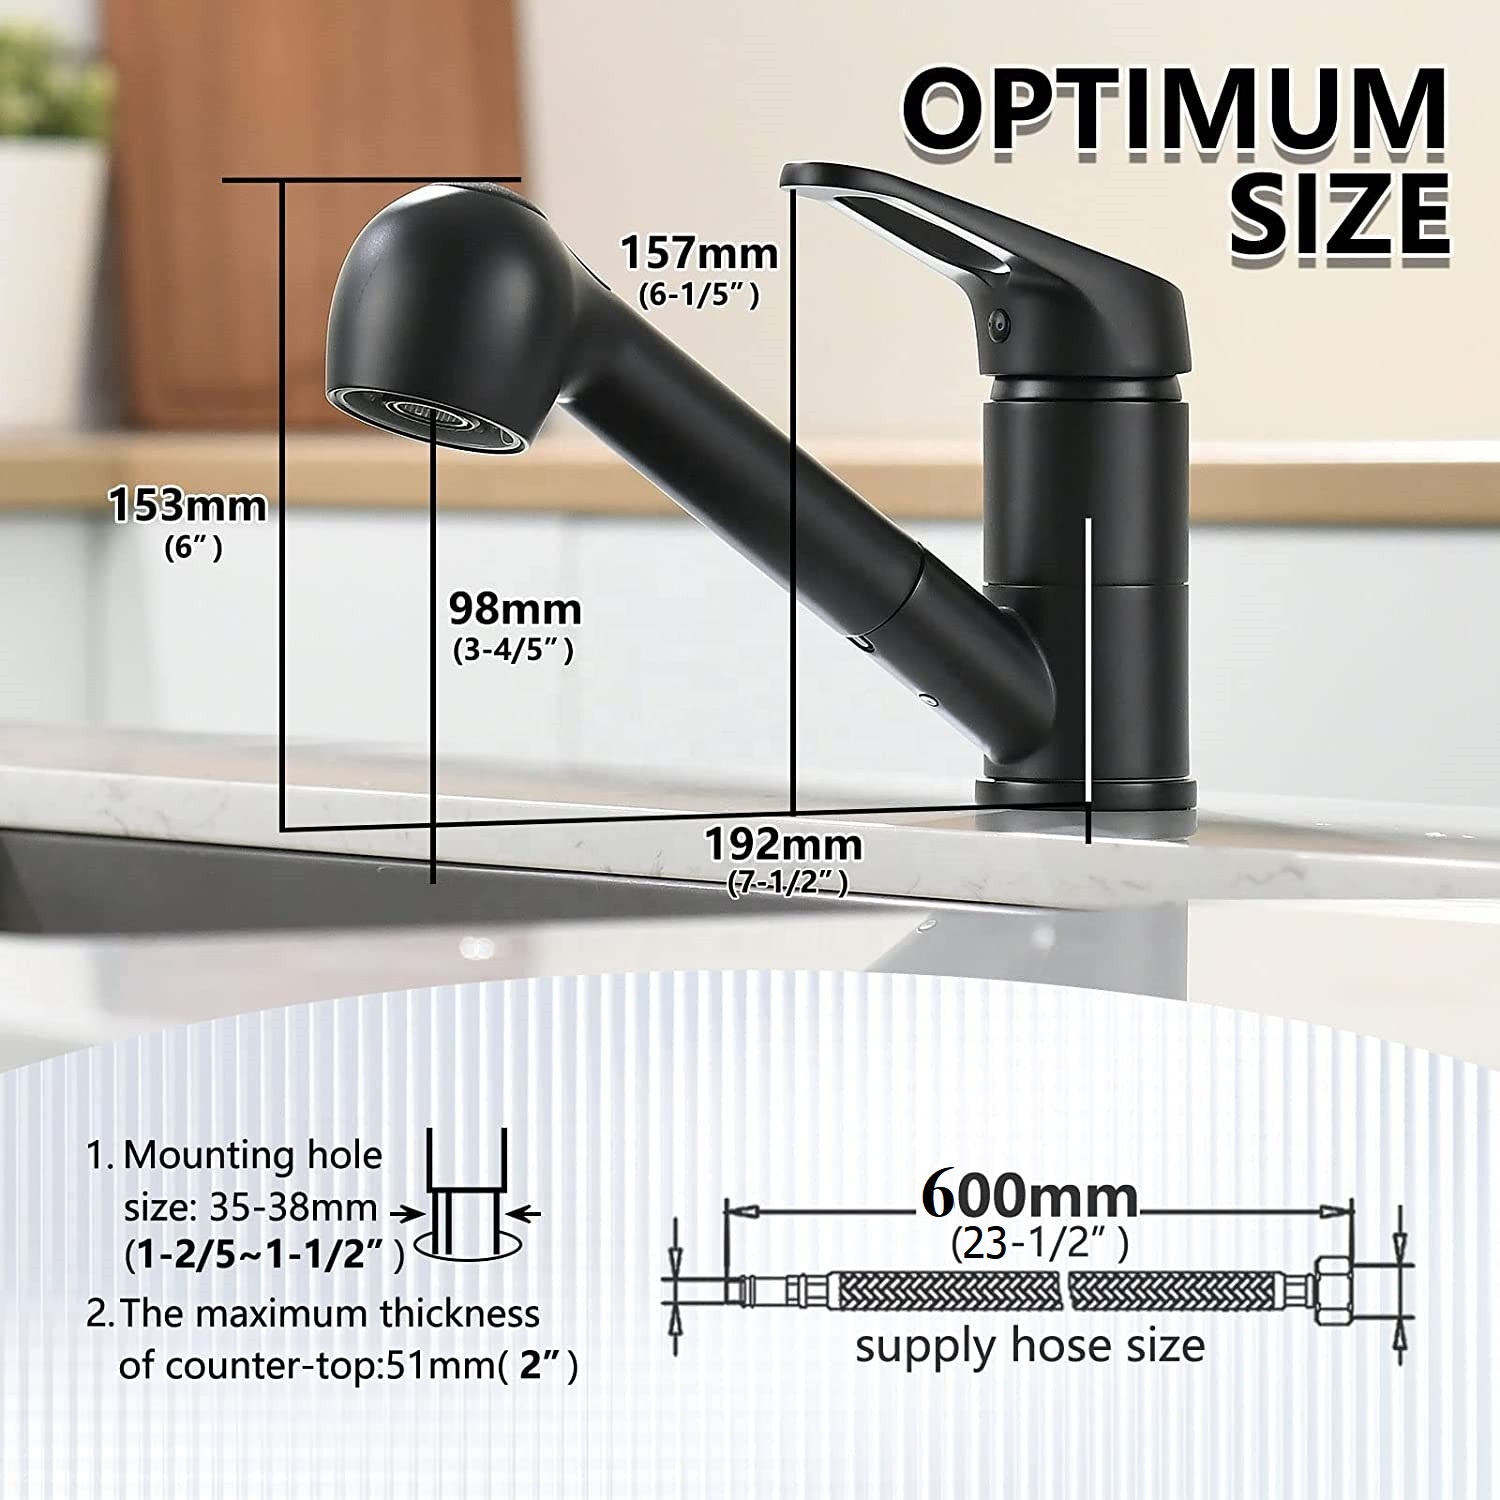 APS308-MB Kitchen Faucets For Sale Black Single Hole Kitchen Faucet Kitchen Faucet Pullout